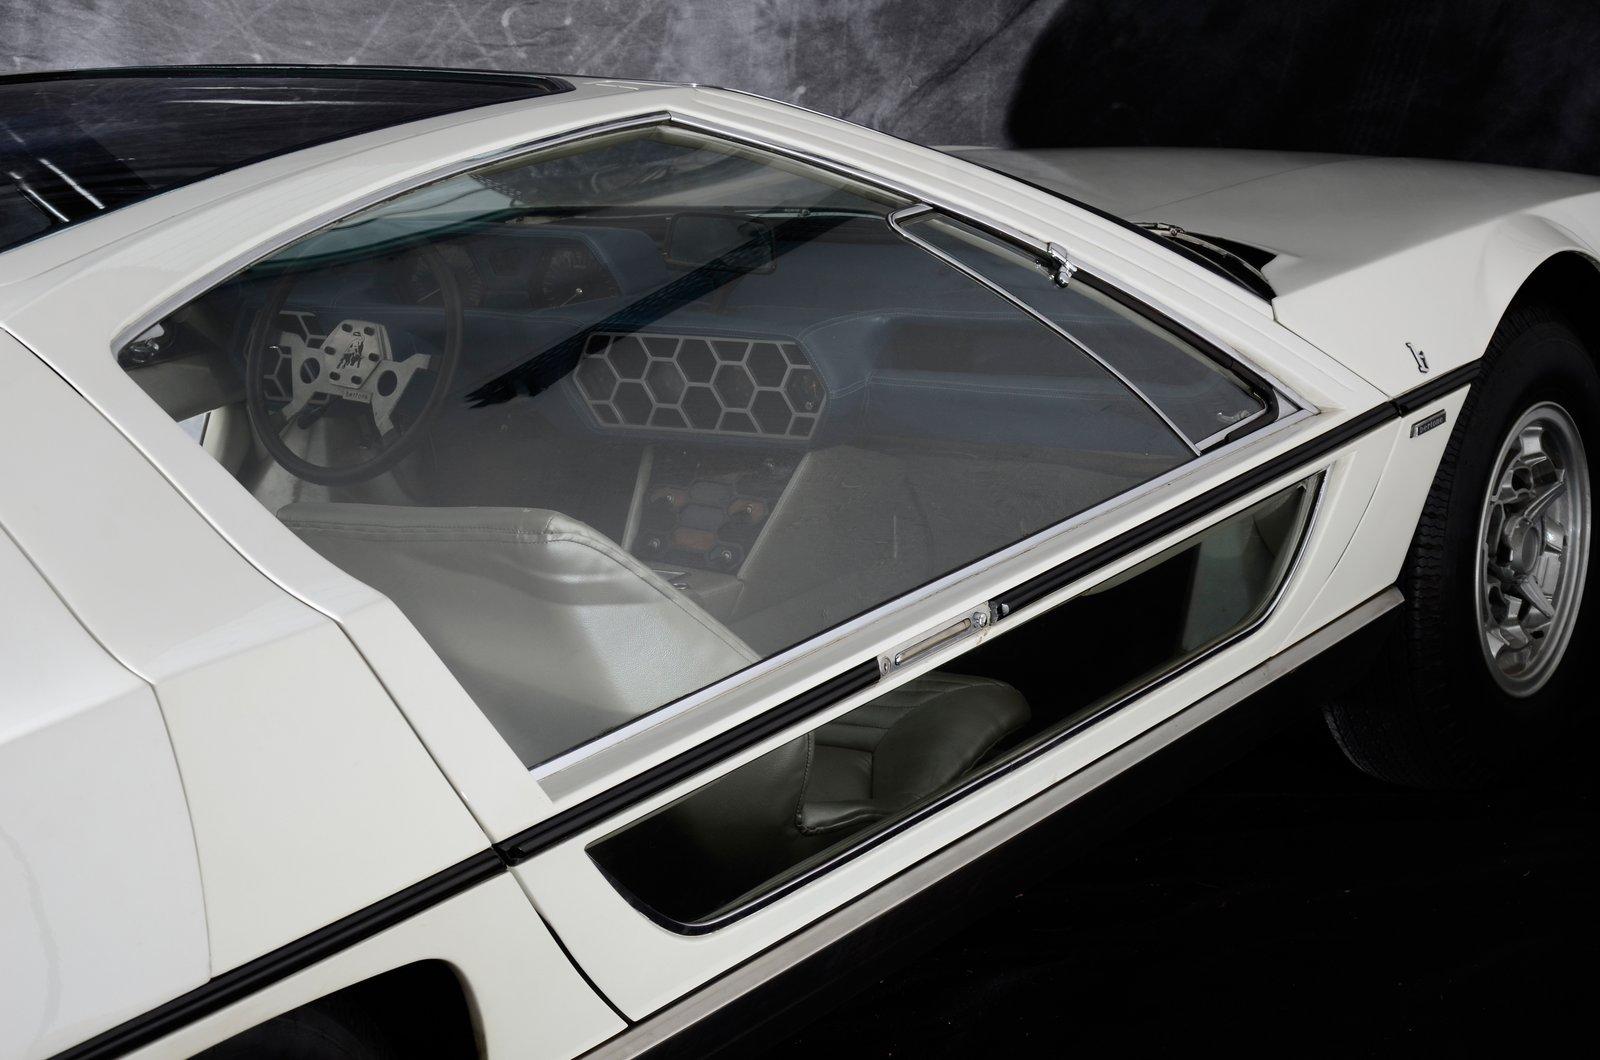 Lamborghini Marzal (Bertone), 1967 - Photo: Tom Wood / Courtesy of RM Auctions